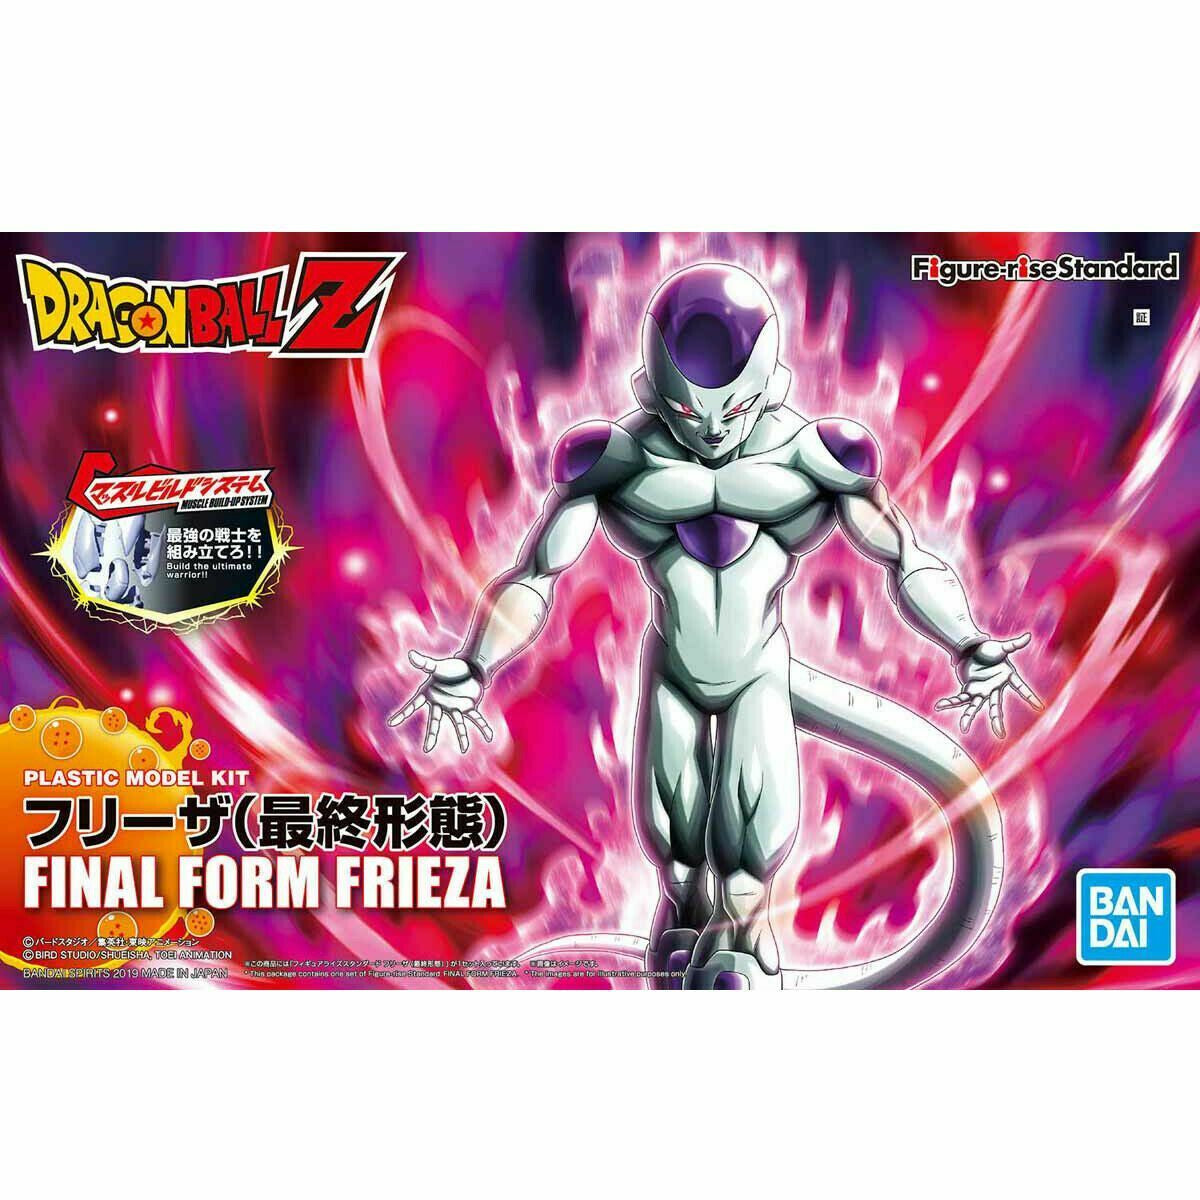 Freeza (Final Form) - Figure-rise Standard